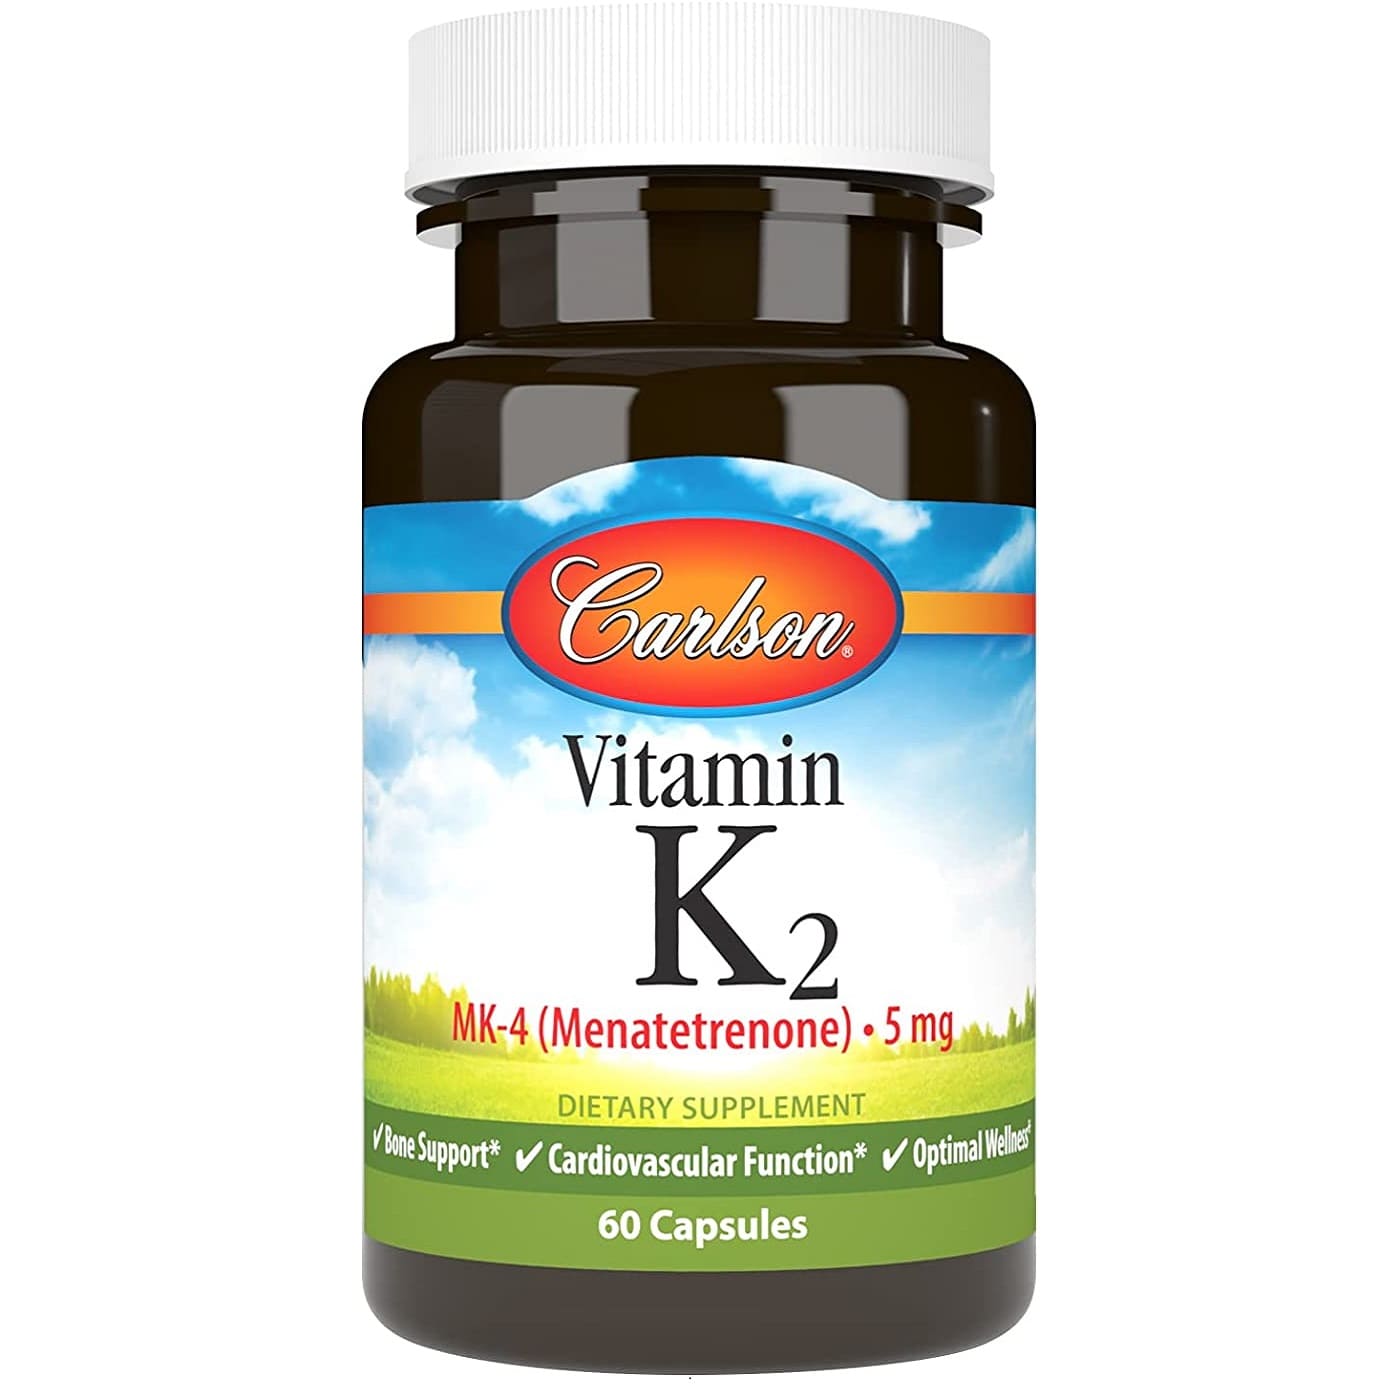 Витамин К2 Carlson Менатетранон 5 мг, 60 капсул витамин к2 45мкг мк 7 carlson labs 90 капсул добавка для костей сердца сосудов крови для взрослых мужчин и женщин